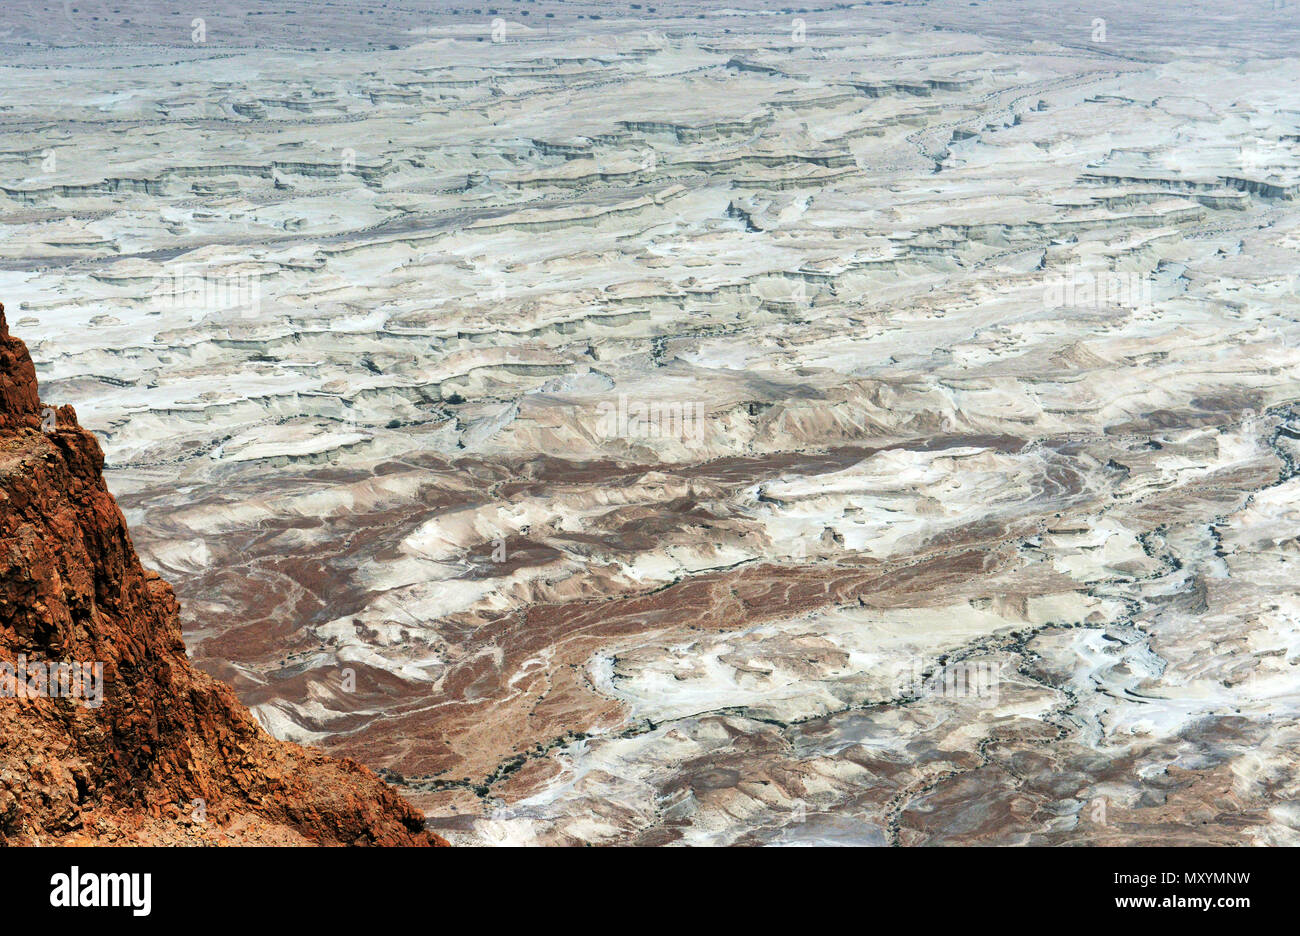 Dramatic arid landscapes near the Dead Sea in Israel. Stock Photo